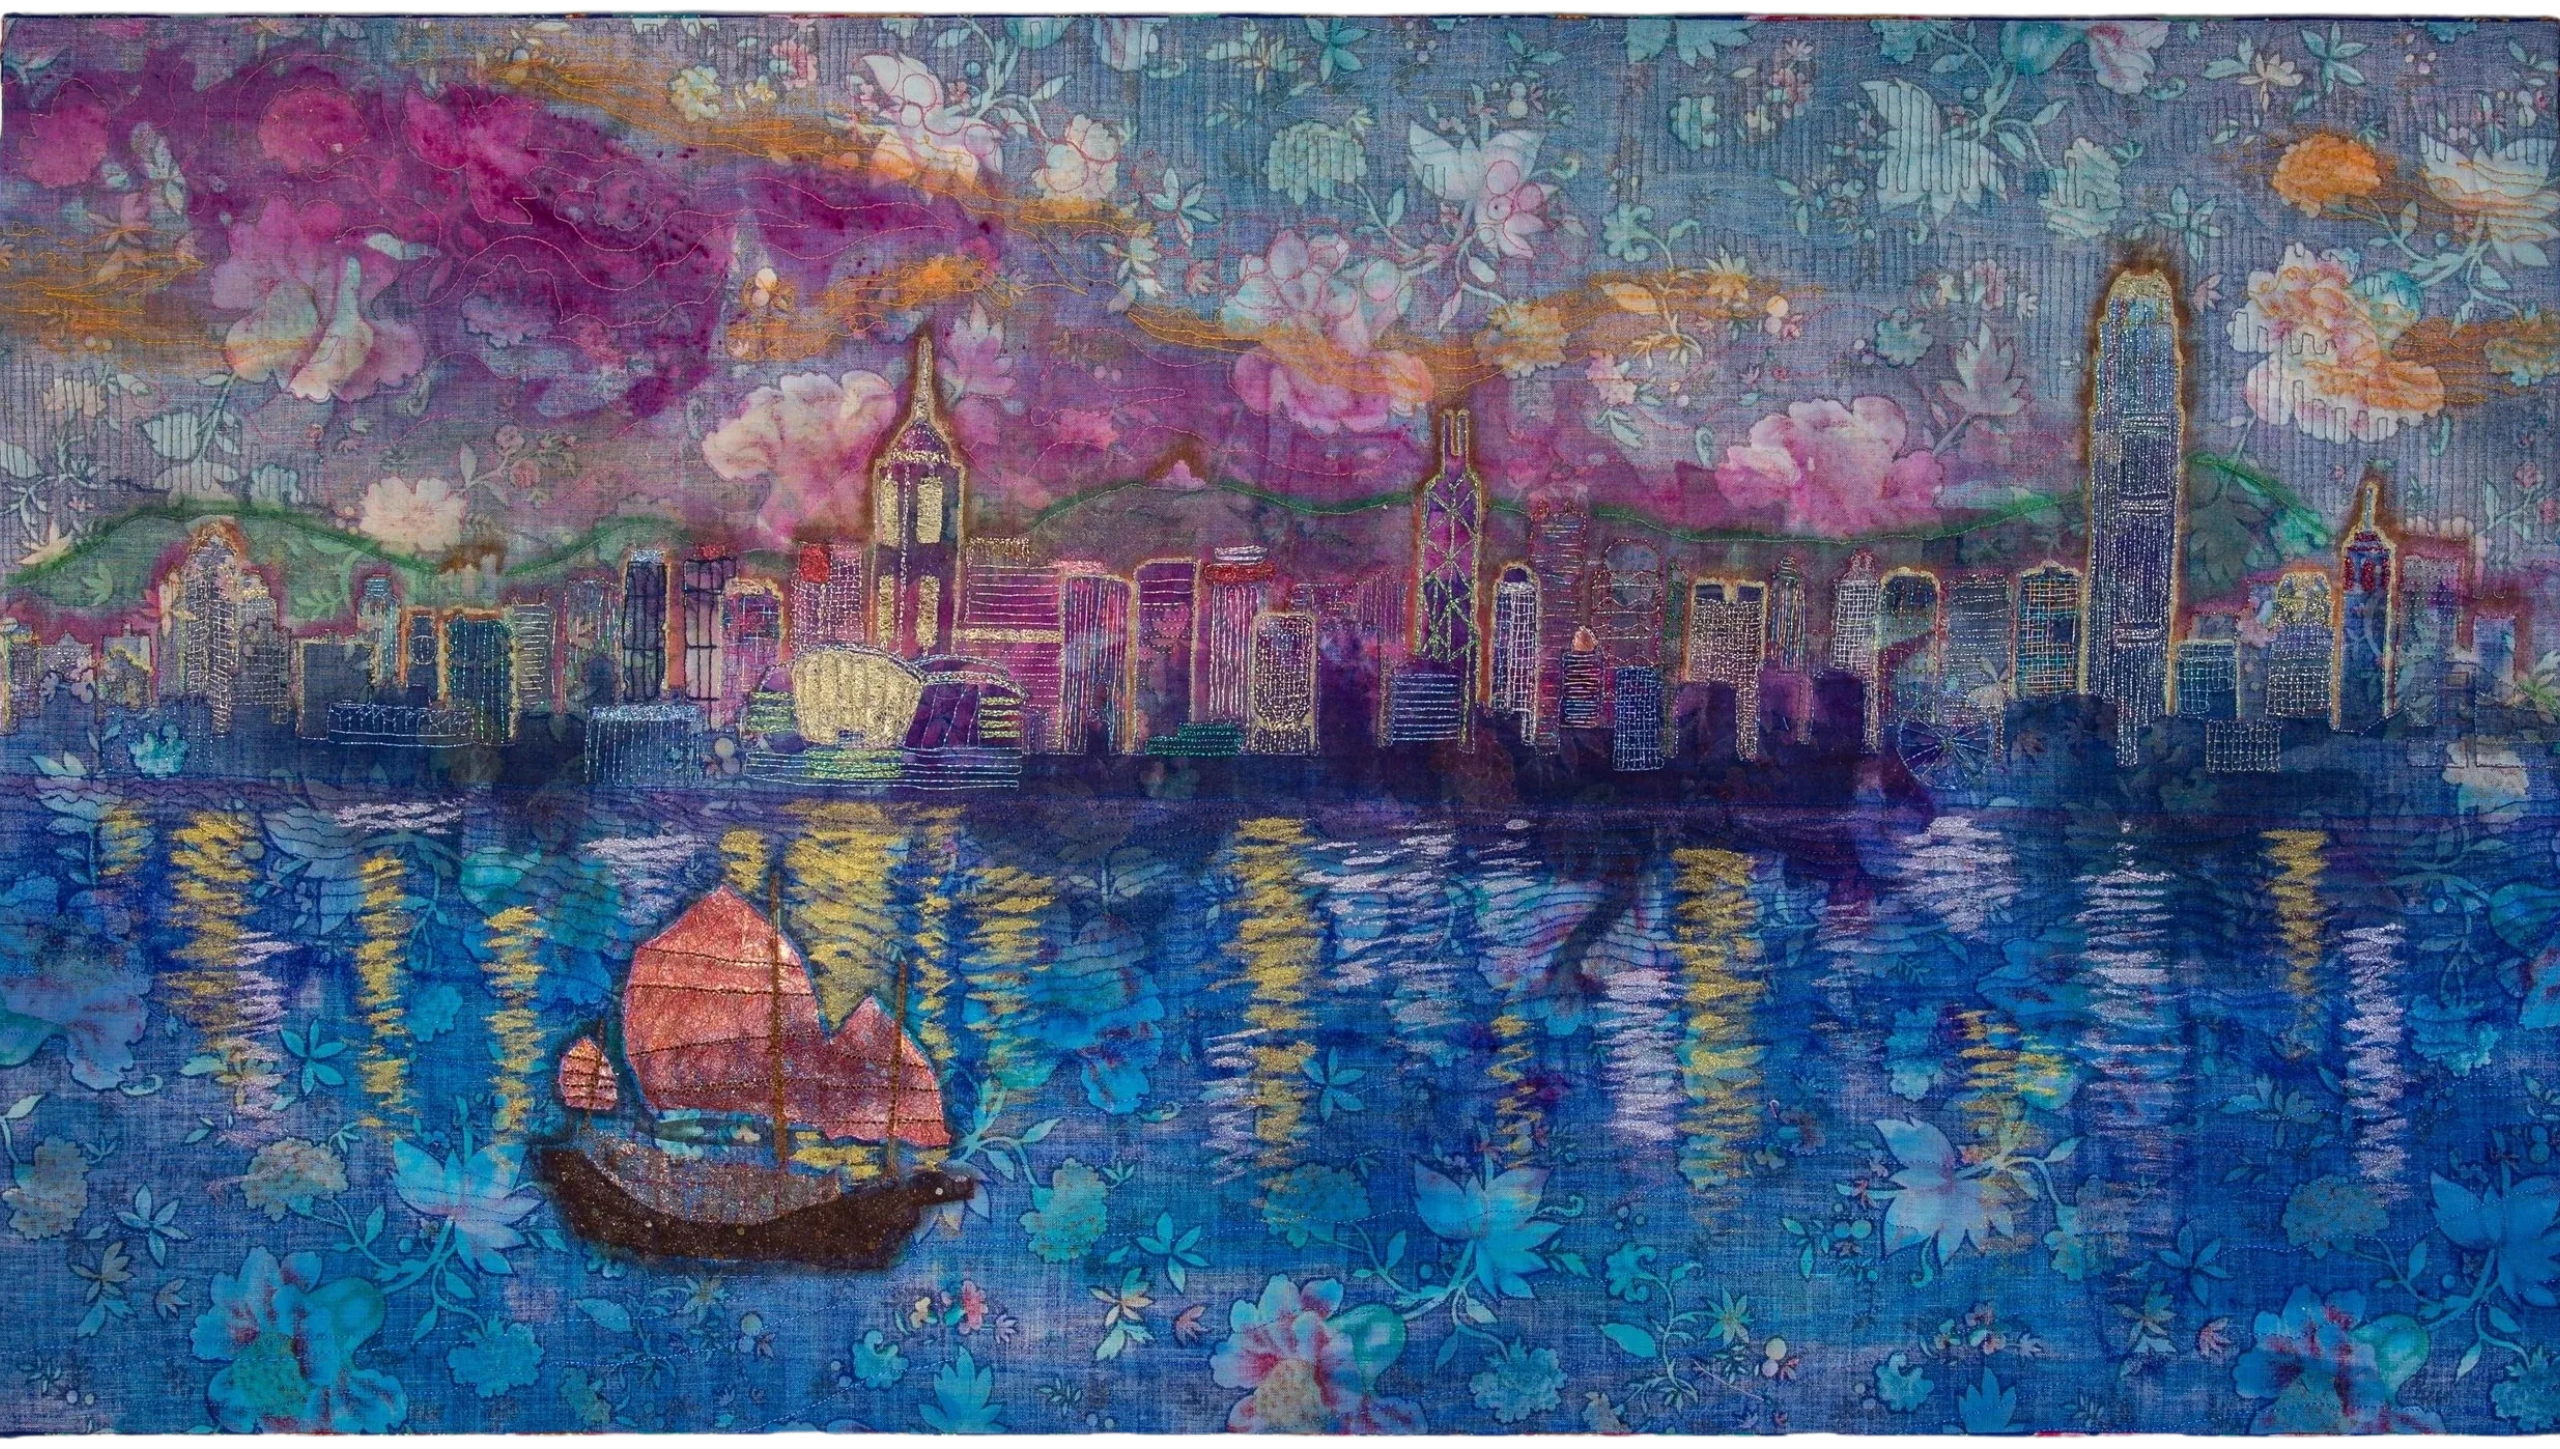 Cityscape, skyscrapers, art quilt, Hong Kong, colorful, harbor reflections, Junk boat, original art